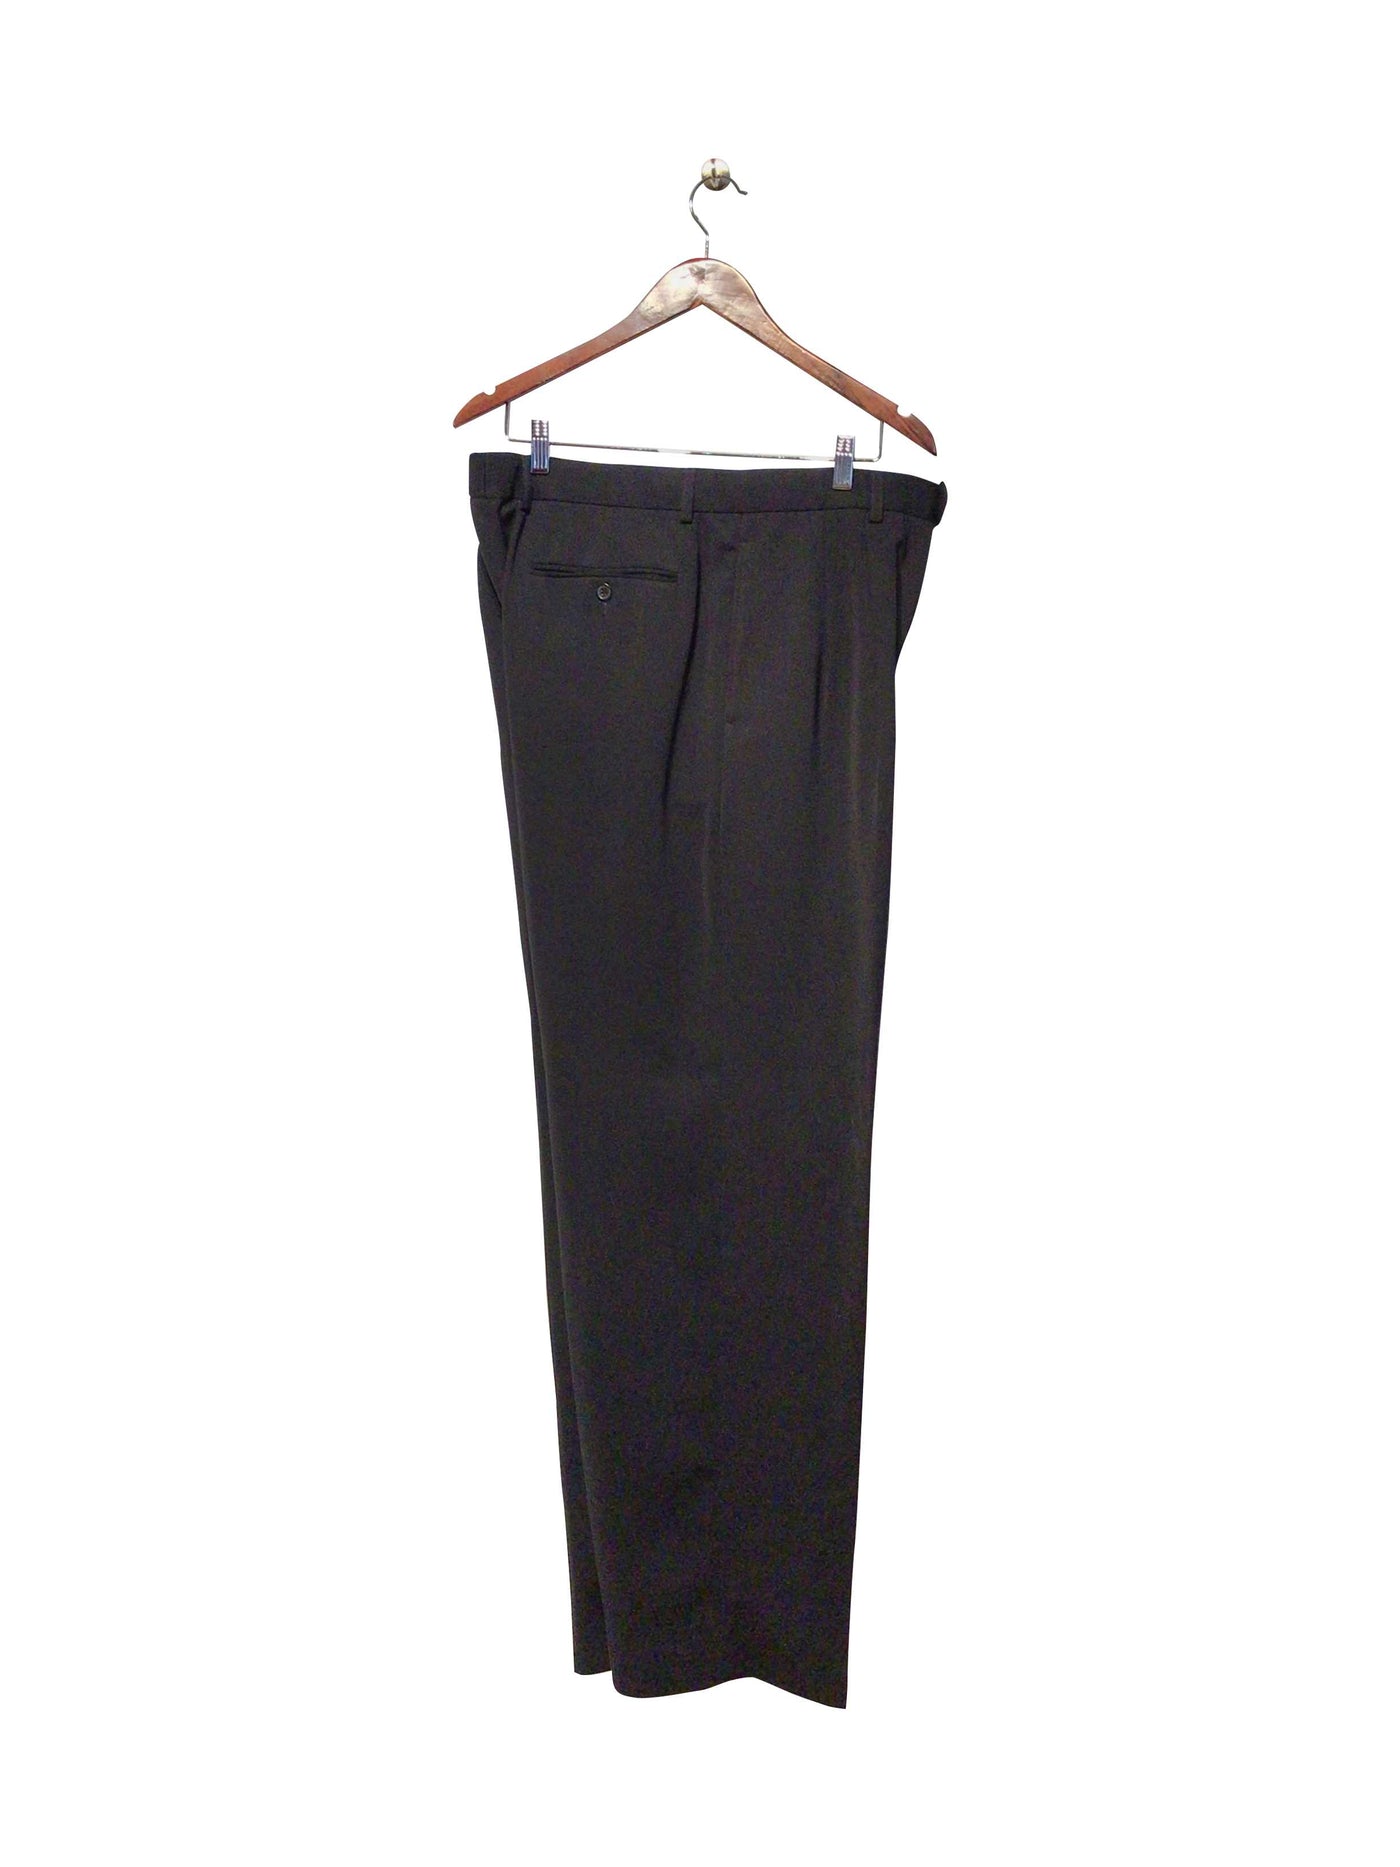 PREMIERE COLLECTION Regular fit Pant in Black  -  38/32  11.38 Koop